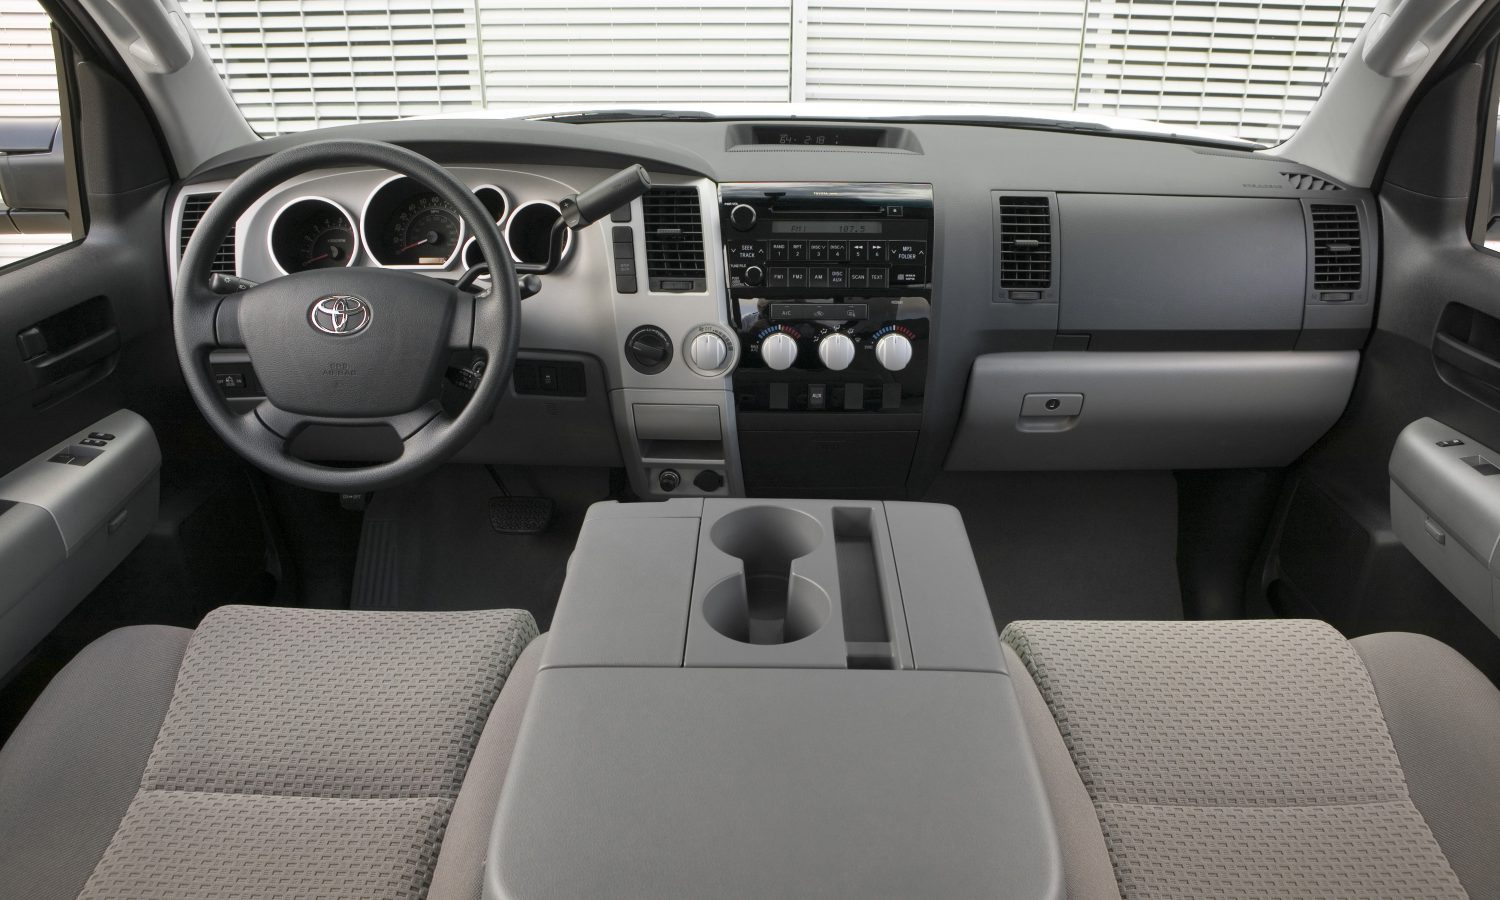 2009 Toyota Tundra Regular Cab 017 - Toyota USA Newsroom